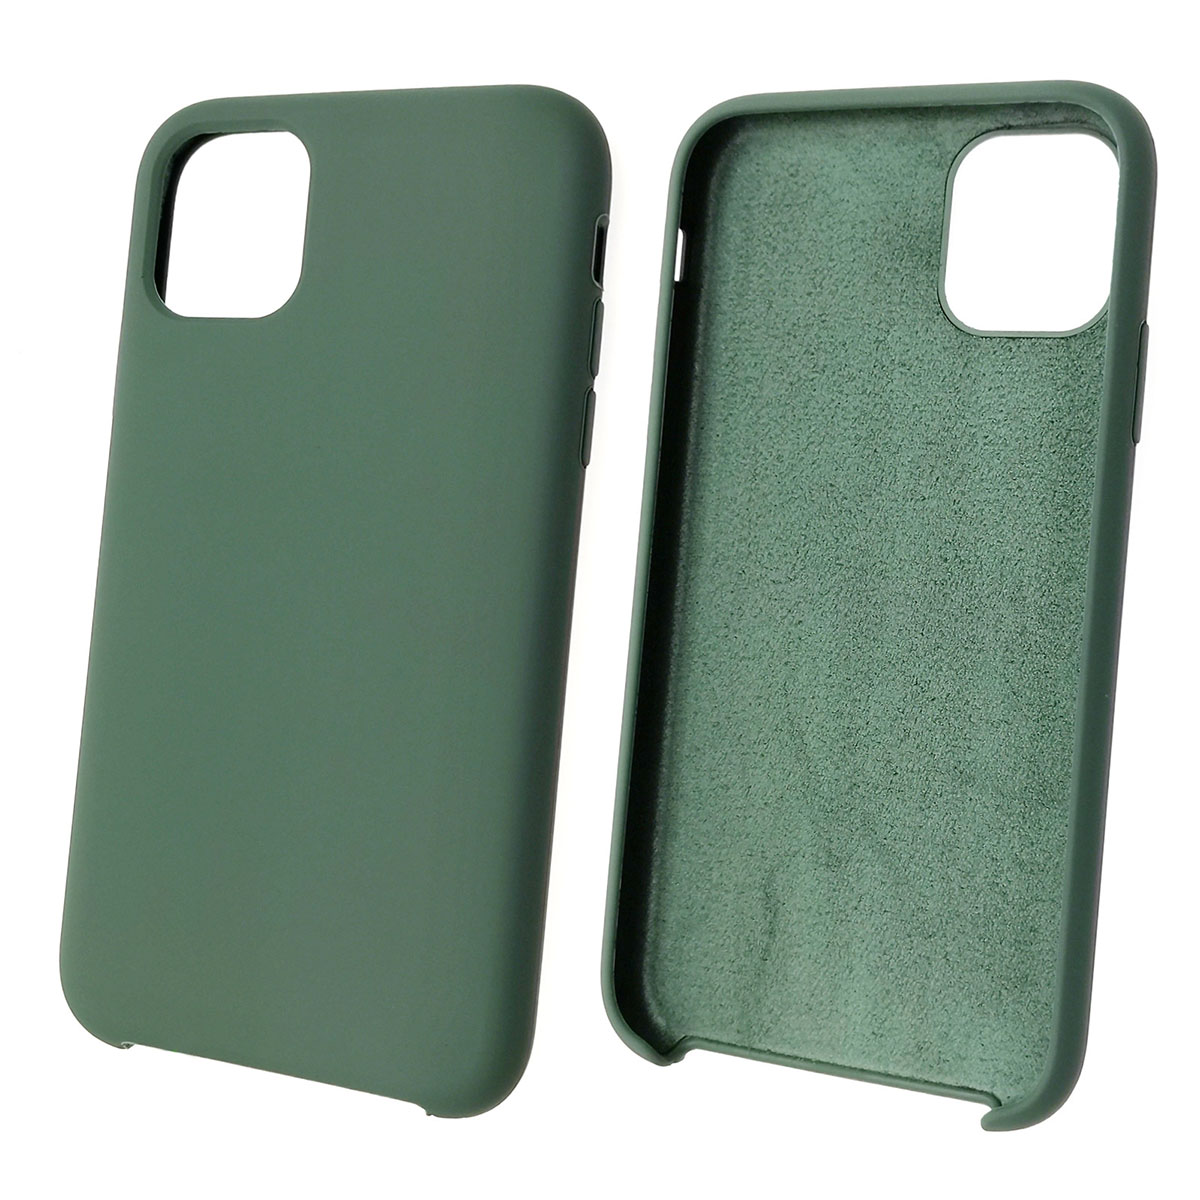 Чехол накладка Silicon Case для APPLE iPhone 11, силикон, бархат, цвет тихий зеленый